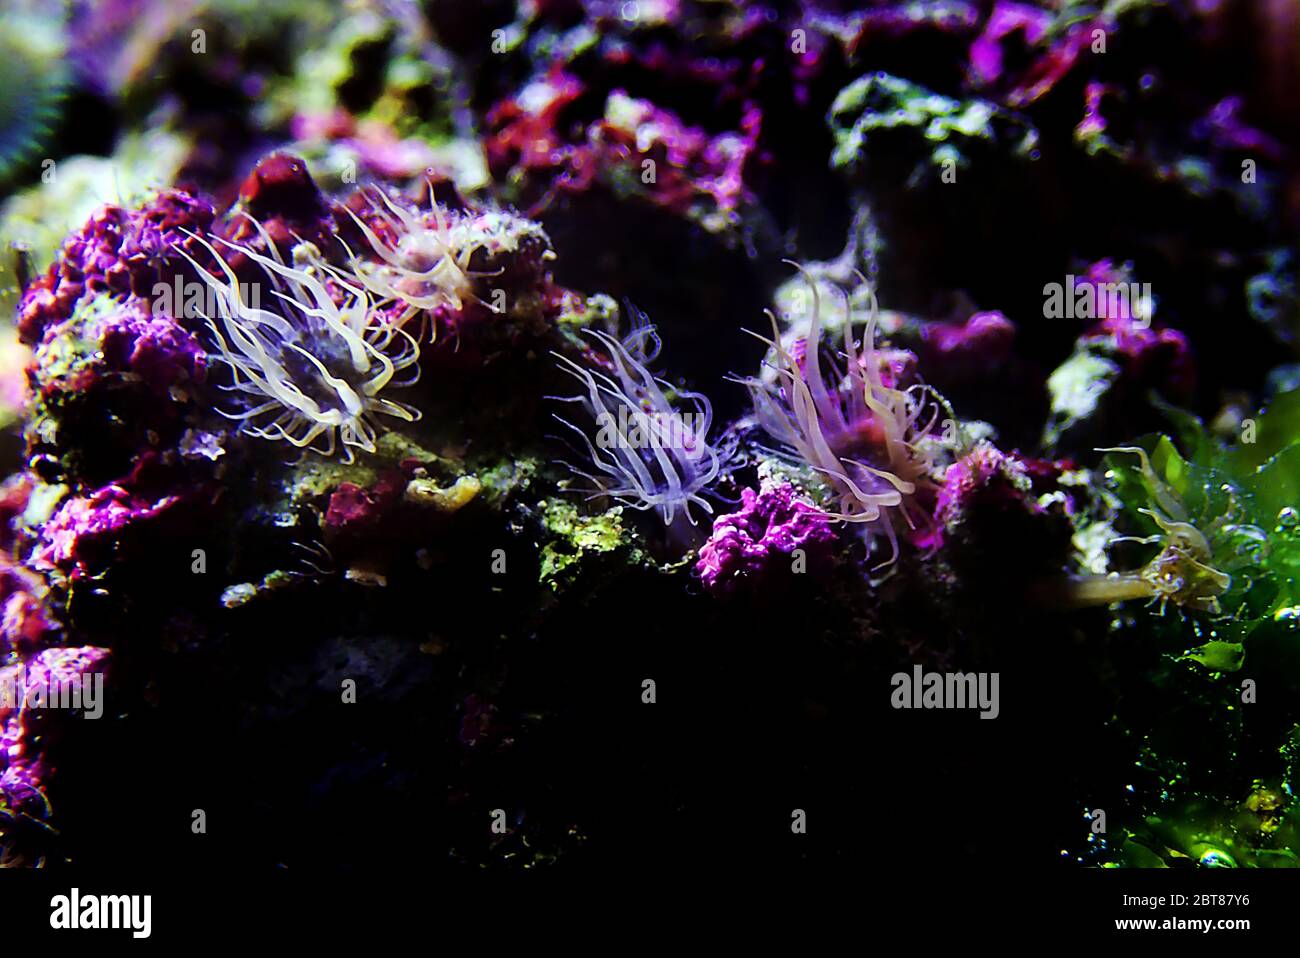 Aiptasia sea glass anemone in aquarium reef tank Stock Photo